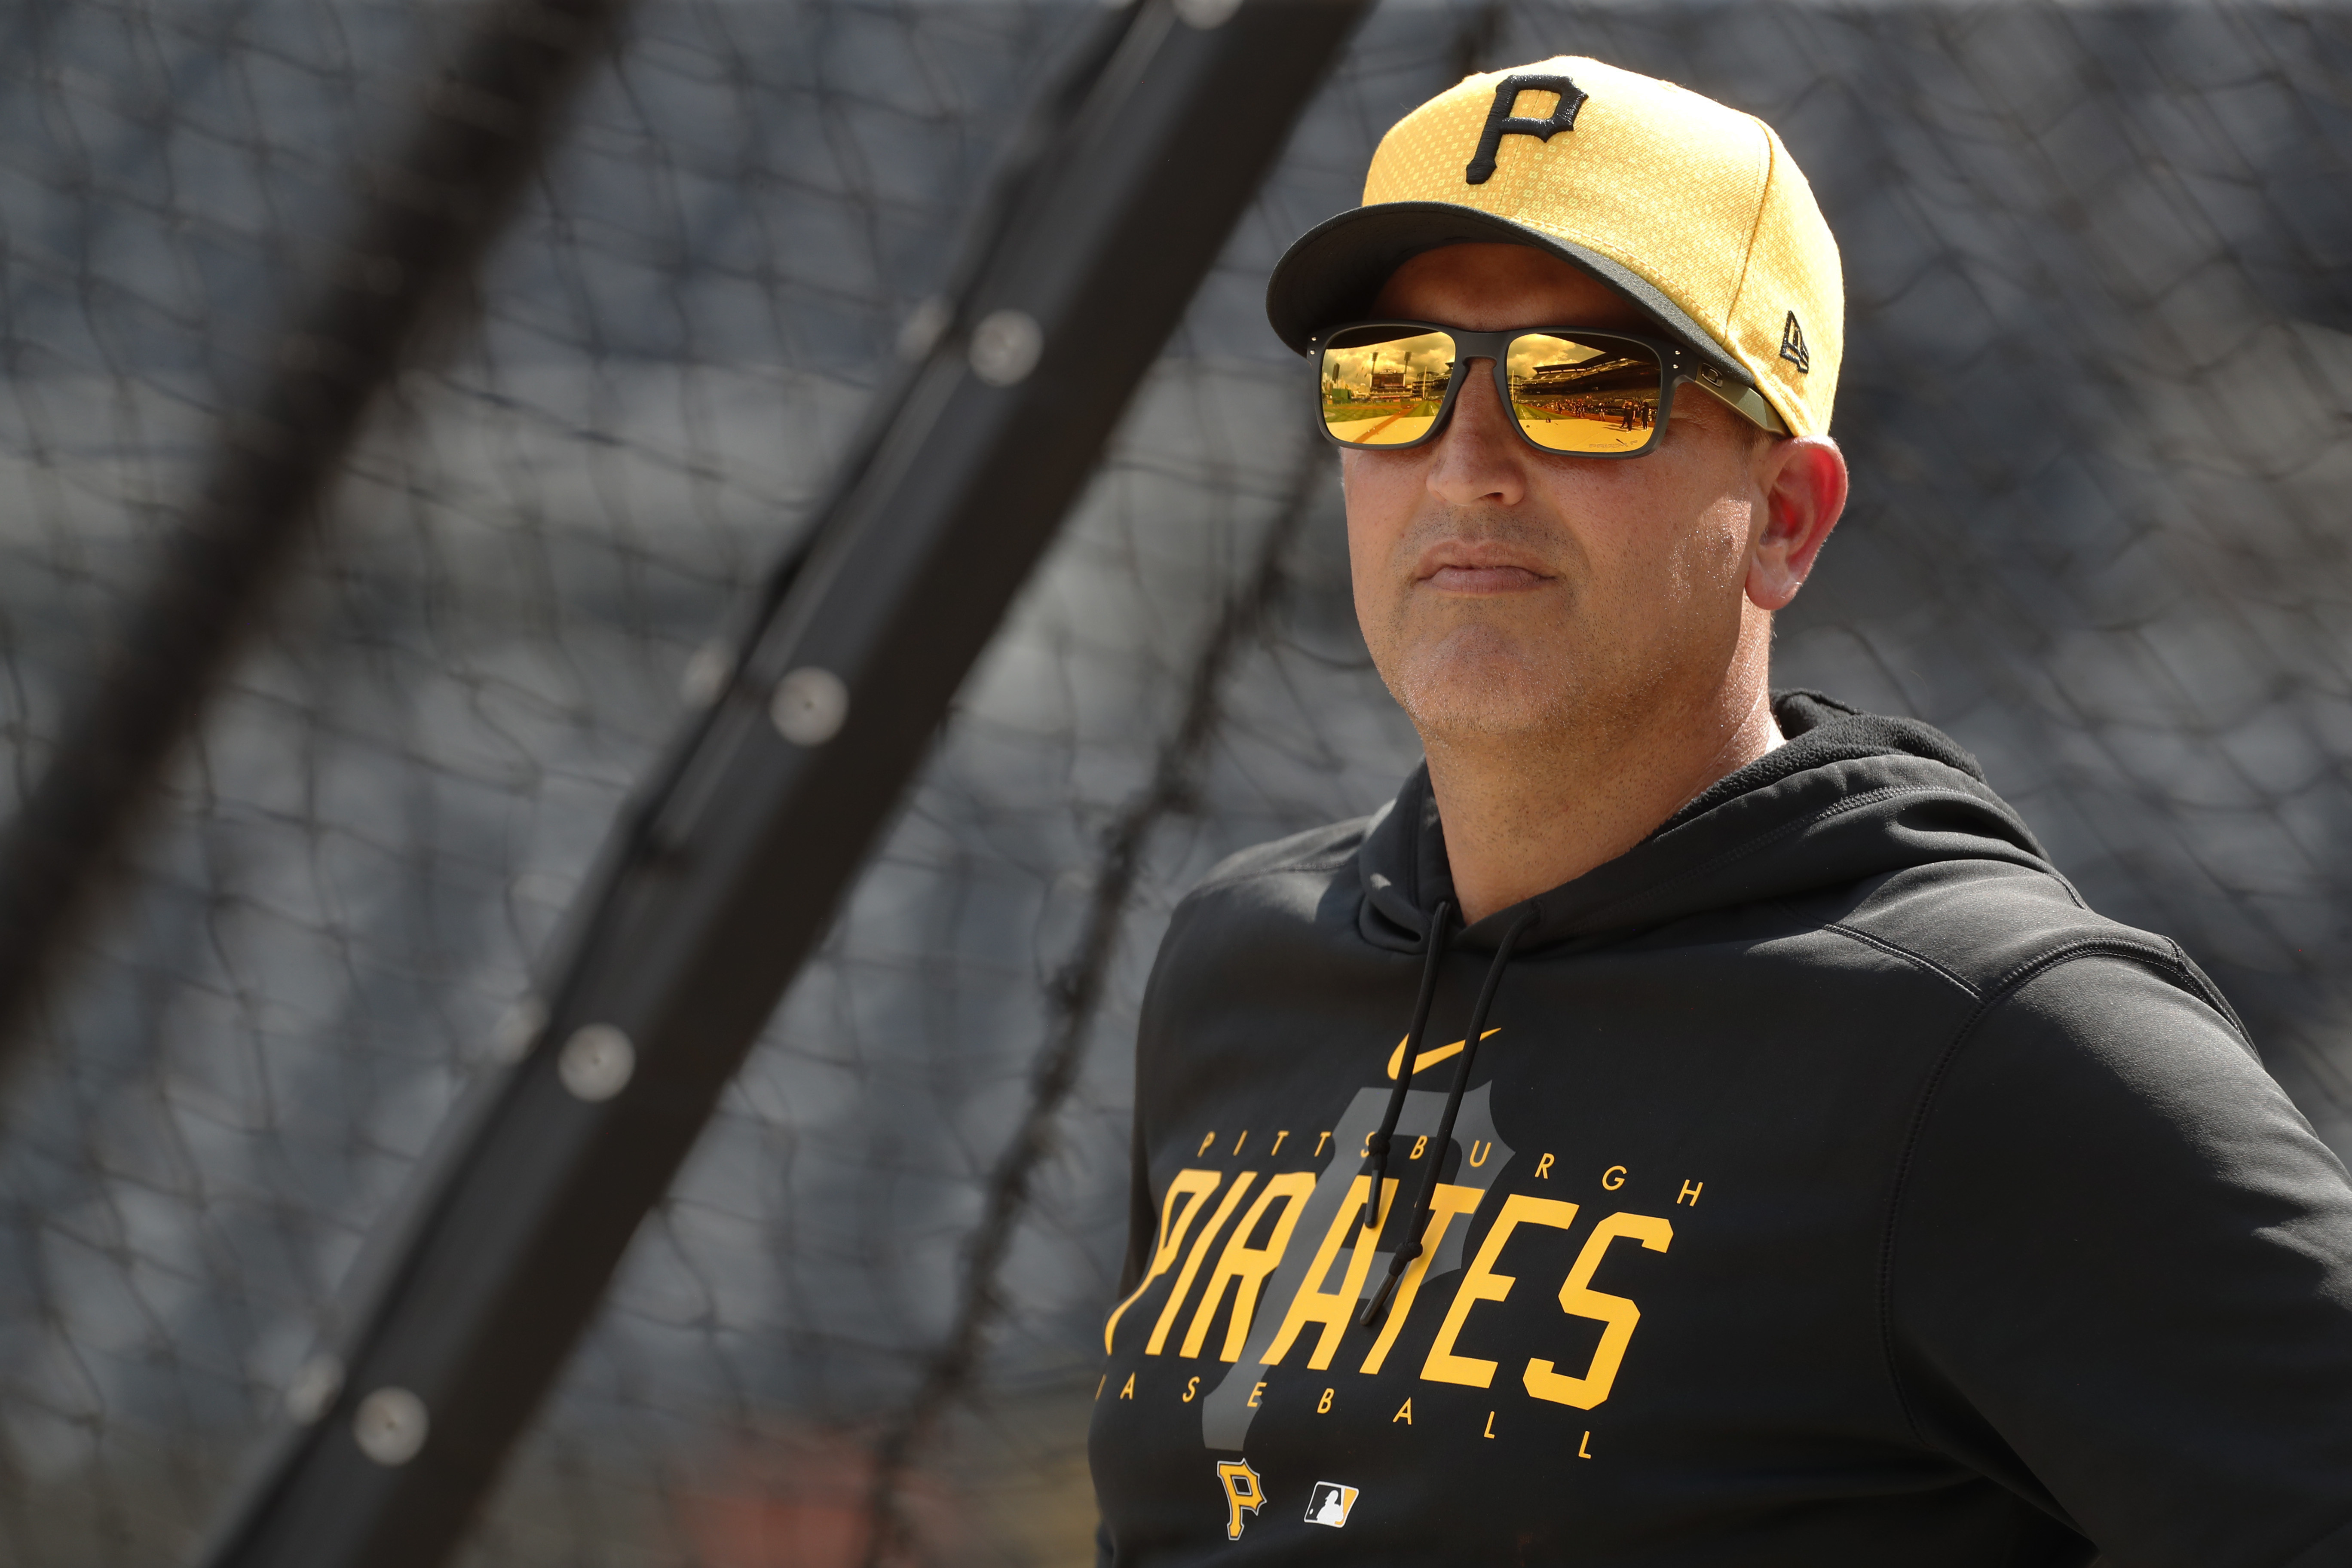 Pittsburgh Pirates Sunglasses 